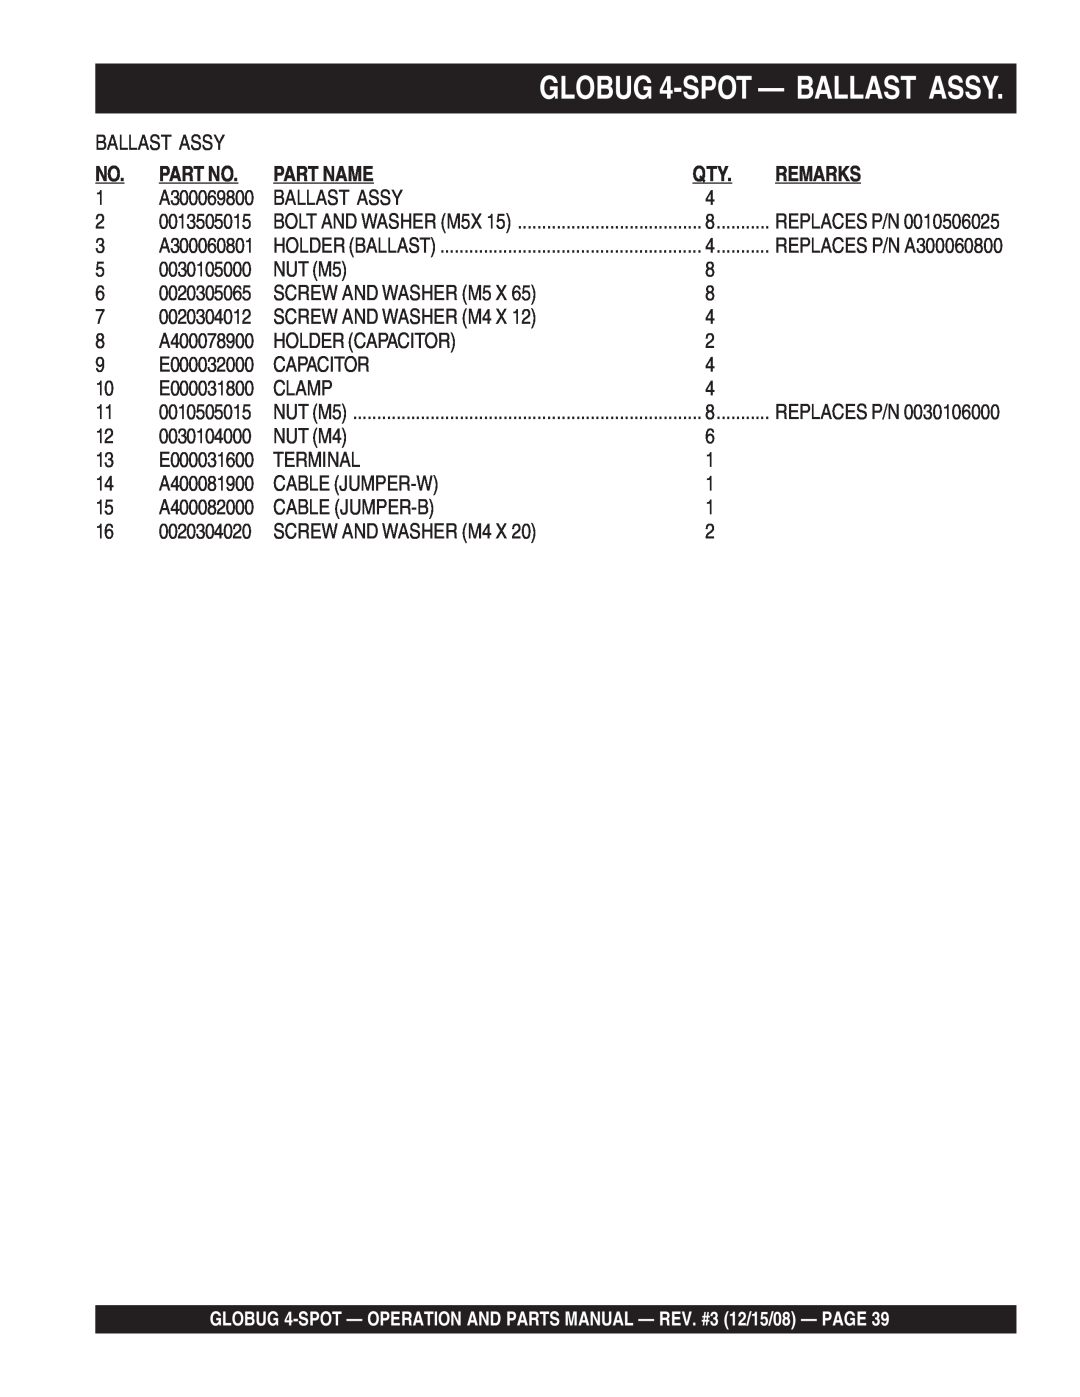 Multiquip gb43sc manual GLOBUG 4-SPOT - BALLAST ASSY, Part Name, Remarks, A300069800 